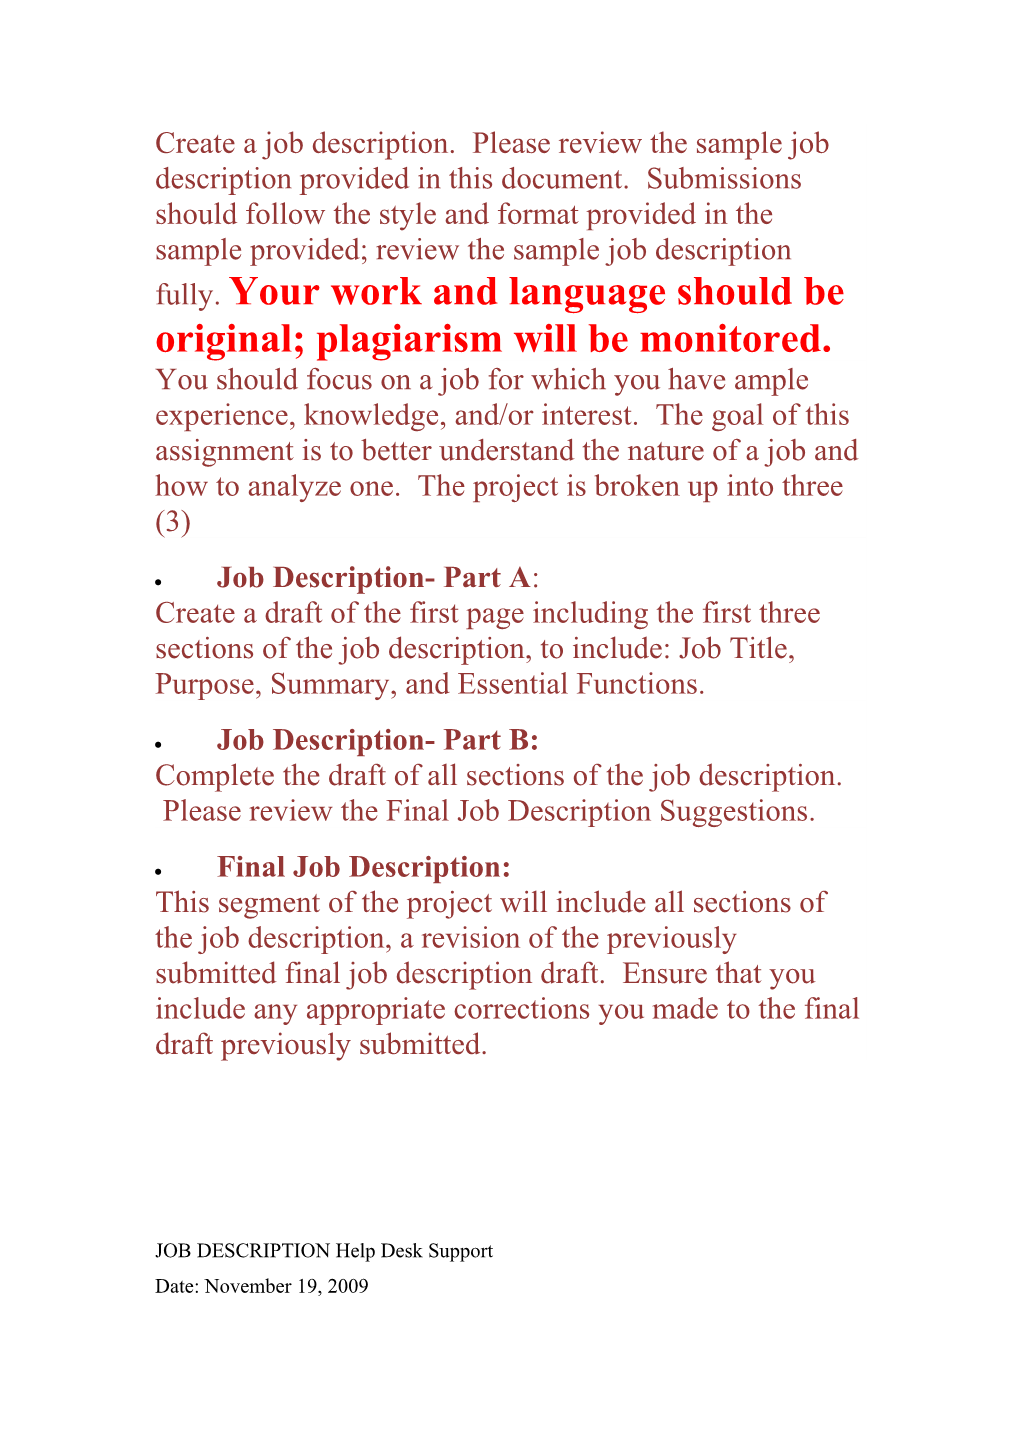 Create a Job Description. Please Review the Sample Job Description Provided in This Document